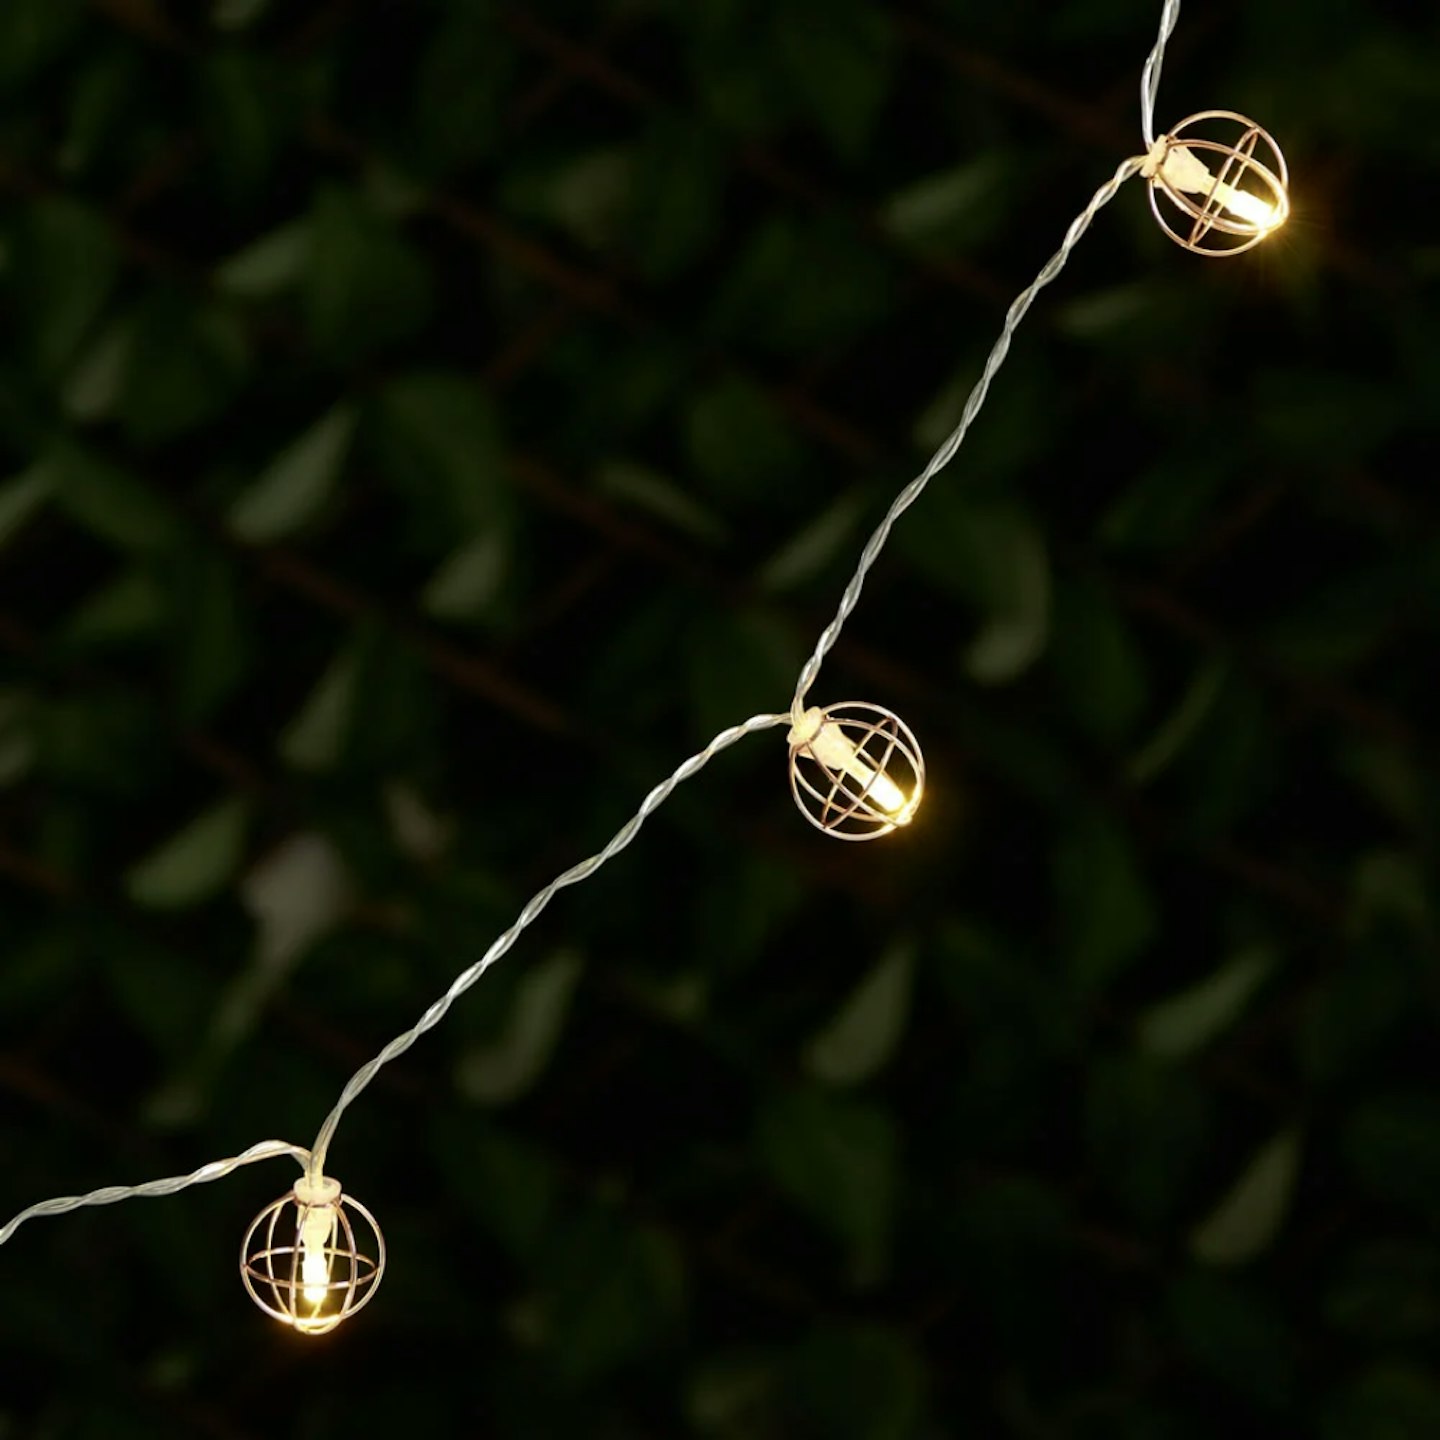 Wilko 10 Bulbs Copper Solar String Lights